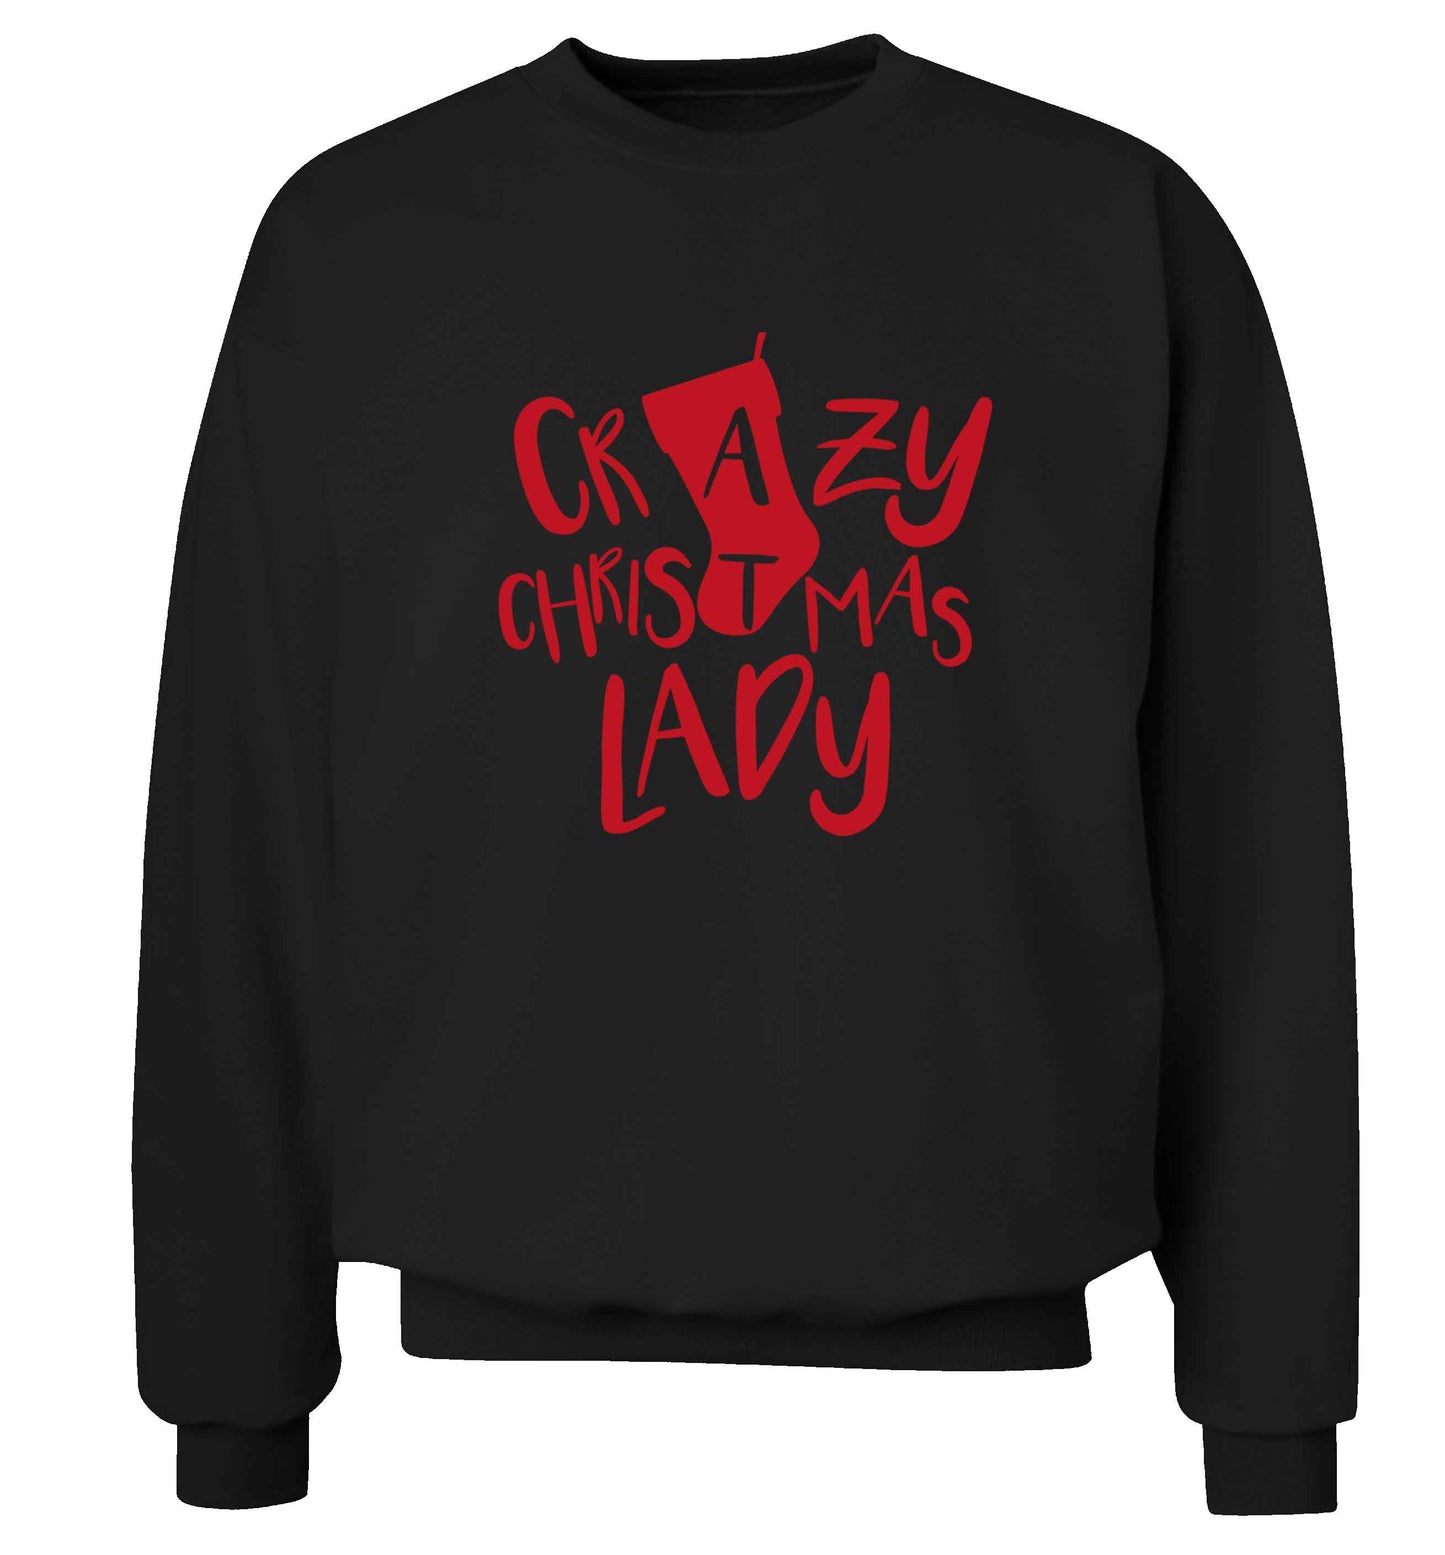 Crazy Christmas Dude adult's unisex black sweater 2XL